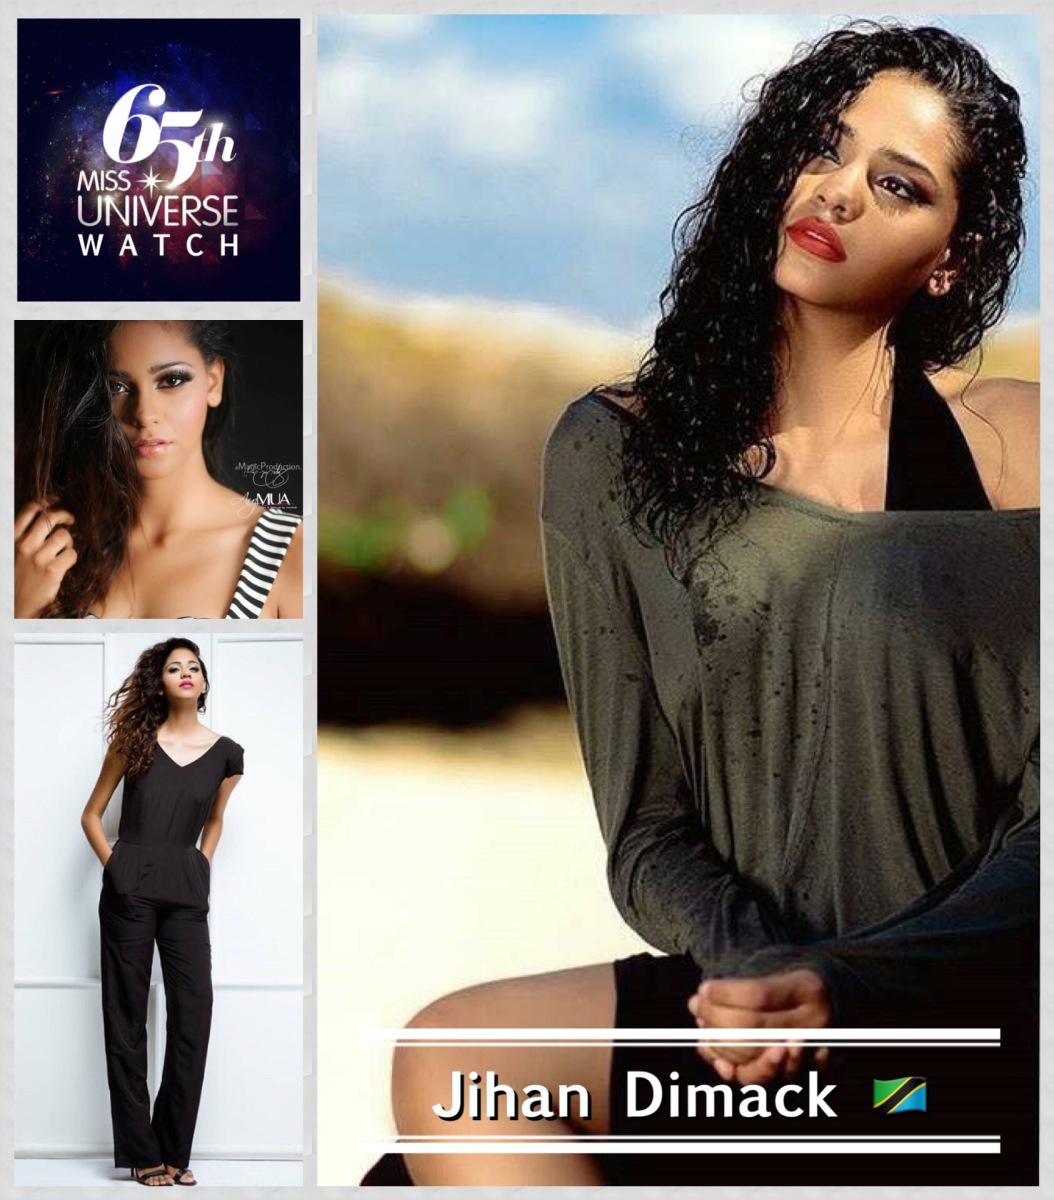 65th Miss Universe Watch | Jihan Dimack of Tanzania | normannorman.com